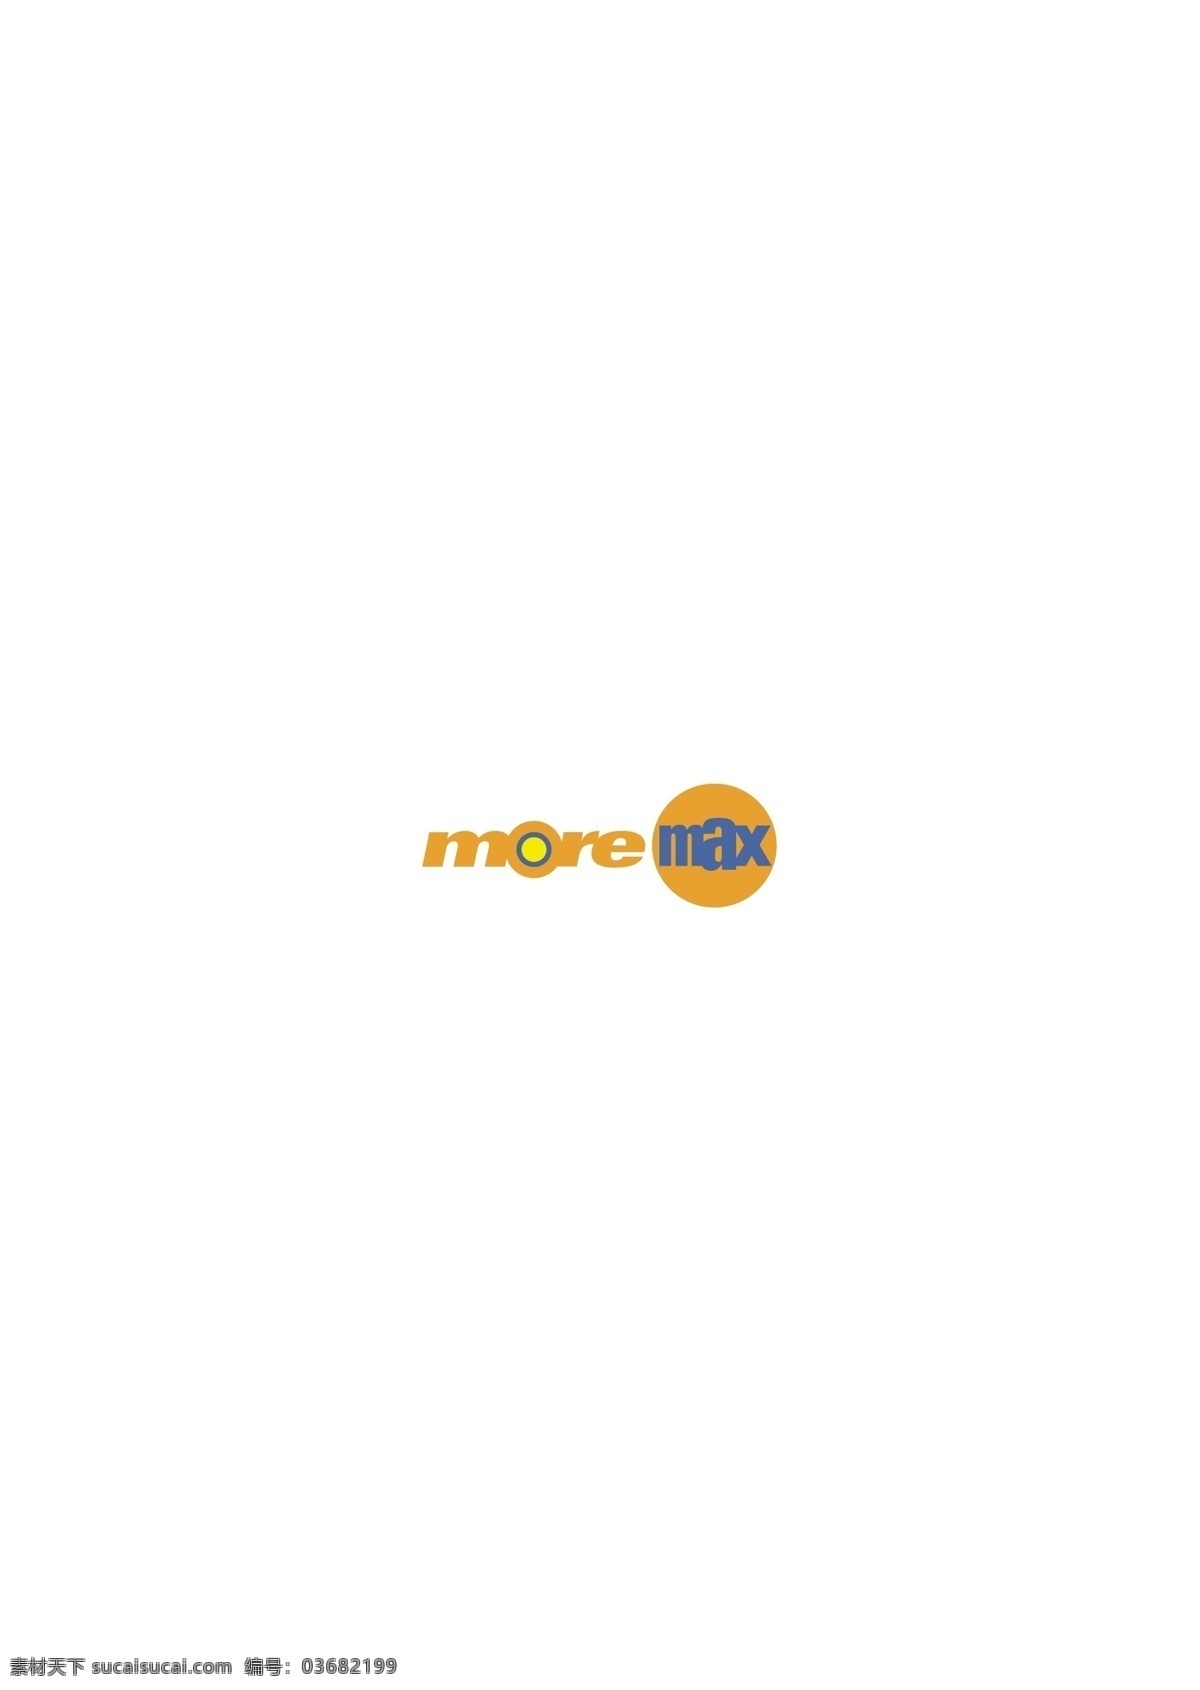 moremax logo大全 logo 设计欣赏 商业矢量 矢量下载 传媒 标志 标志设计 欣赏 网页矢量 矢量图 其他矢量图